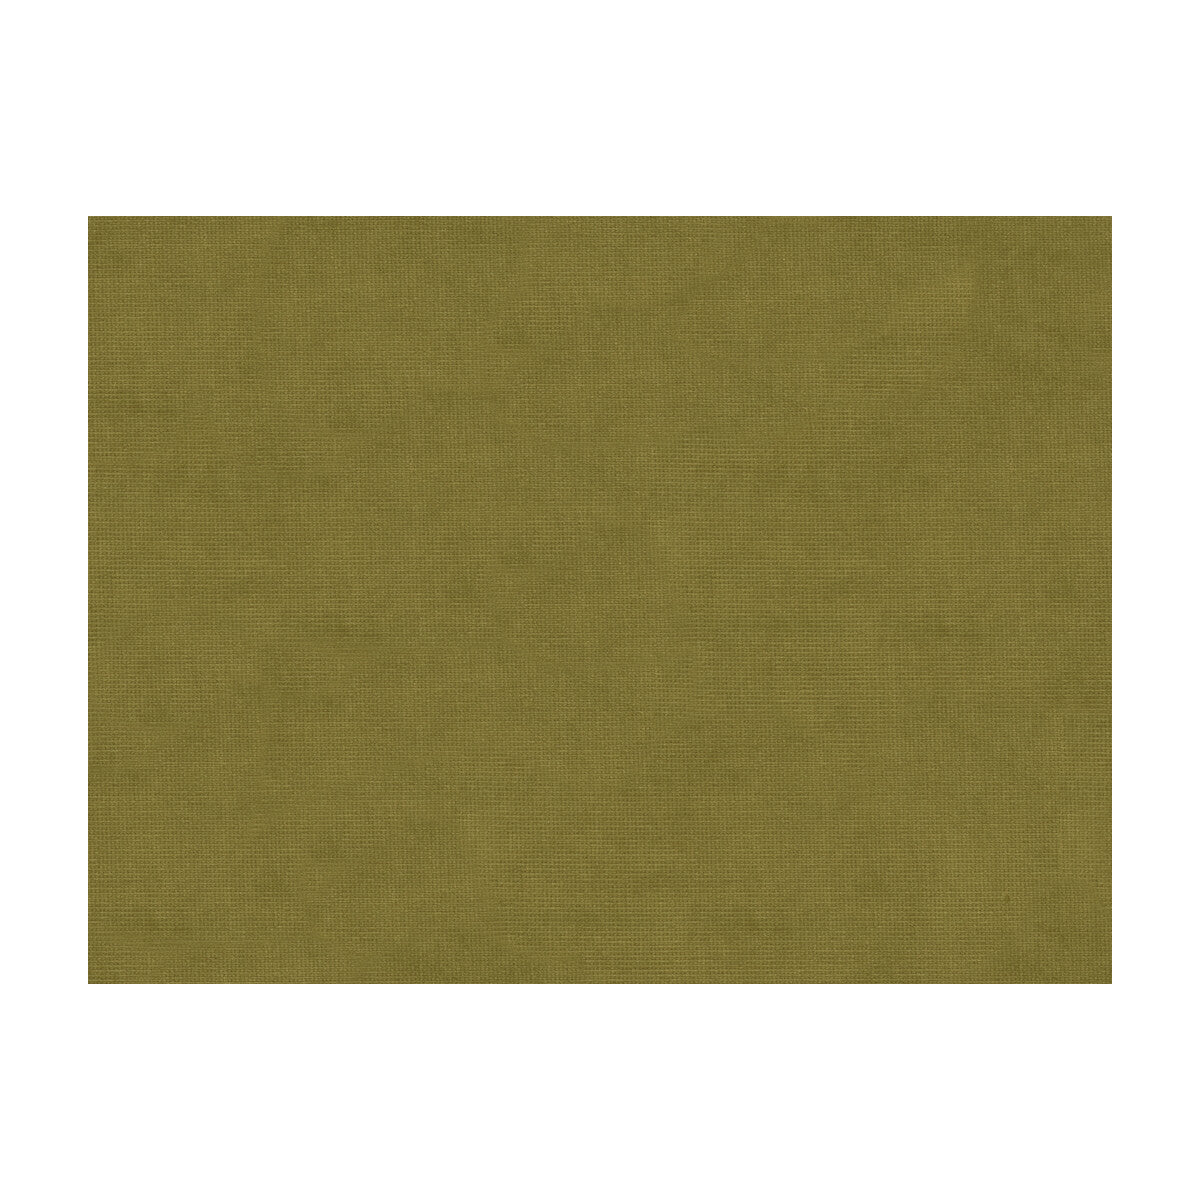 Charmant Velvet fabric in olive color - pattern 8013150.130.0 - by Brunschwig &amp; Fils